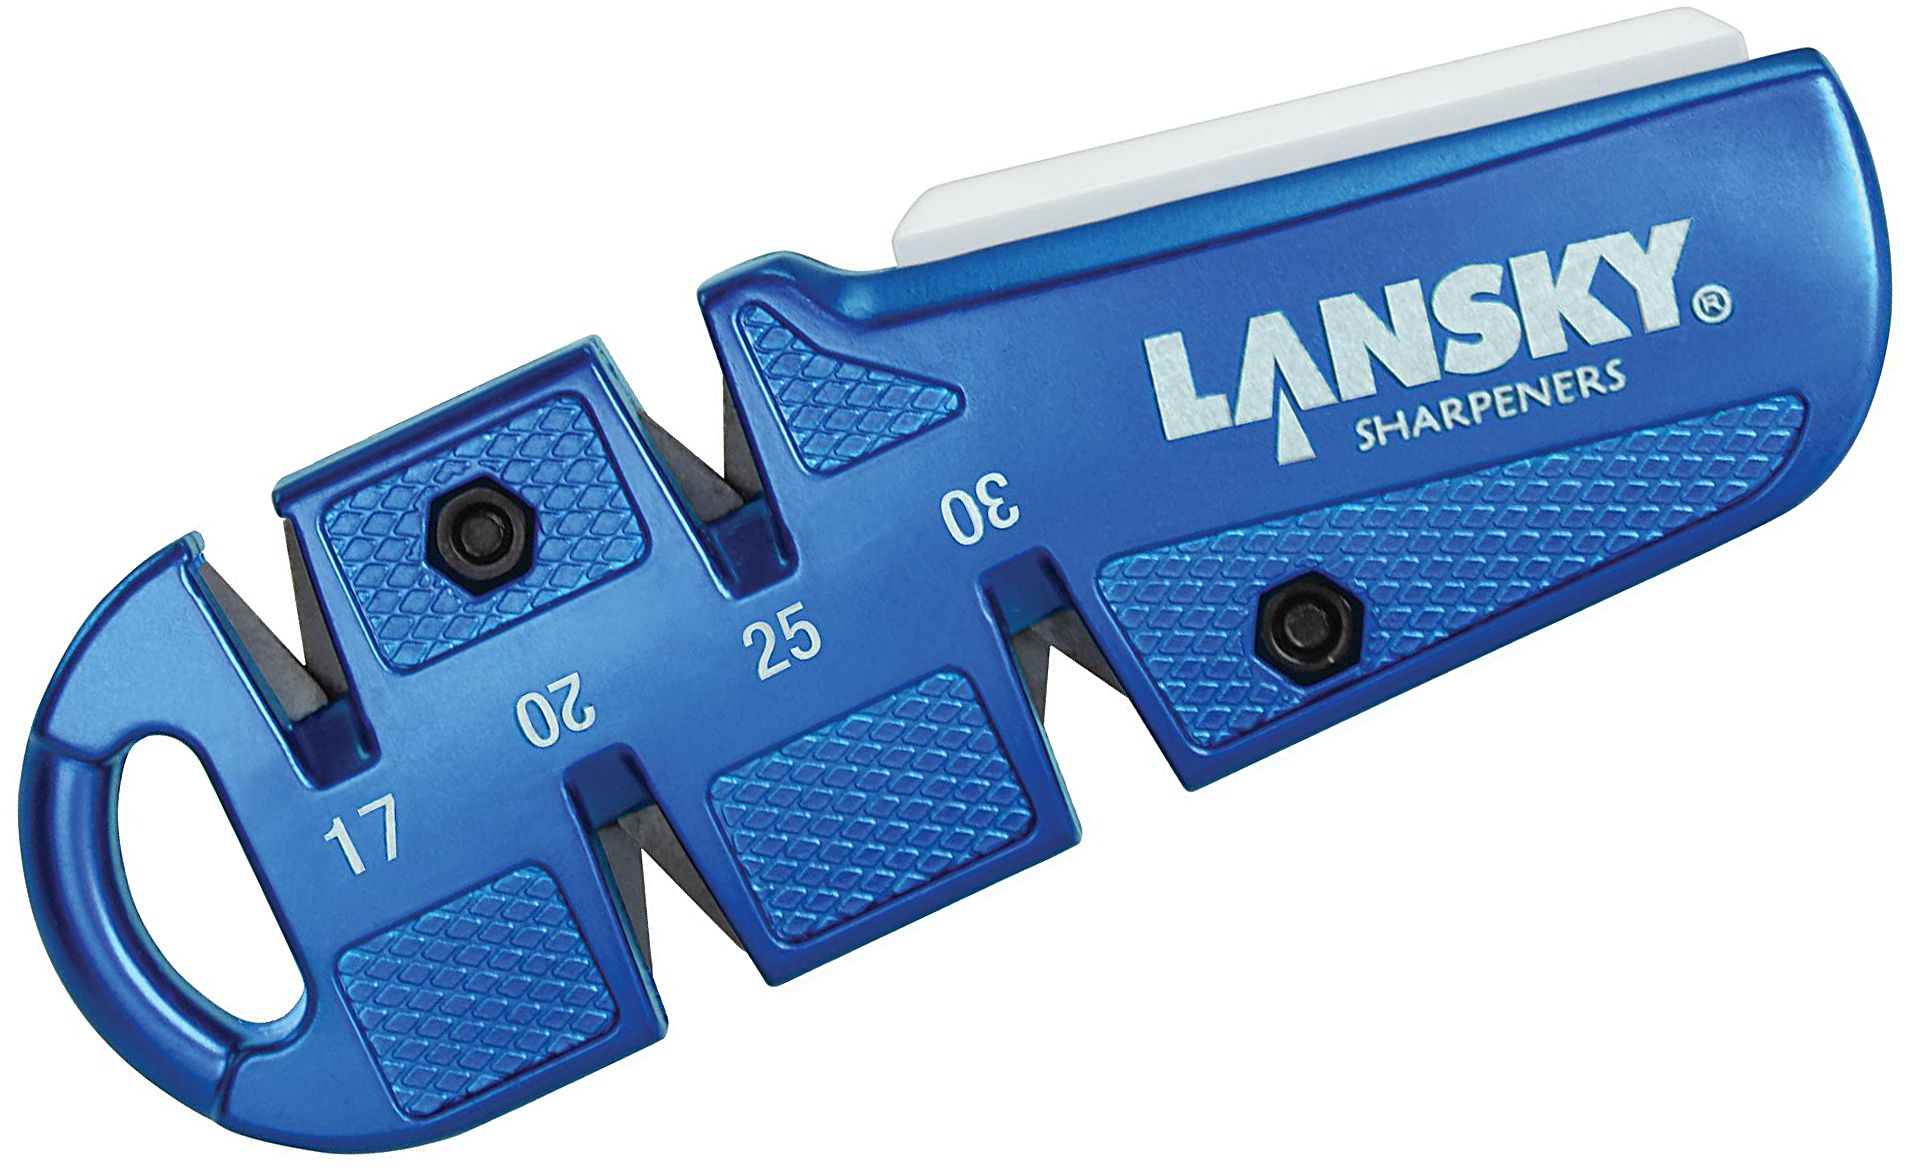 Lansky Sharpeners Ceramic sharpening kit